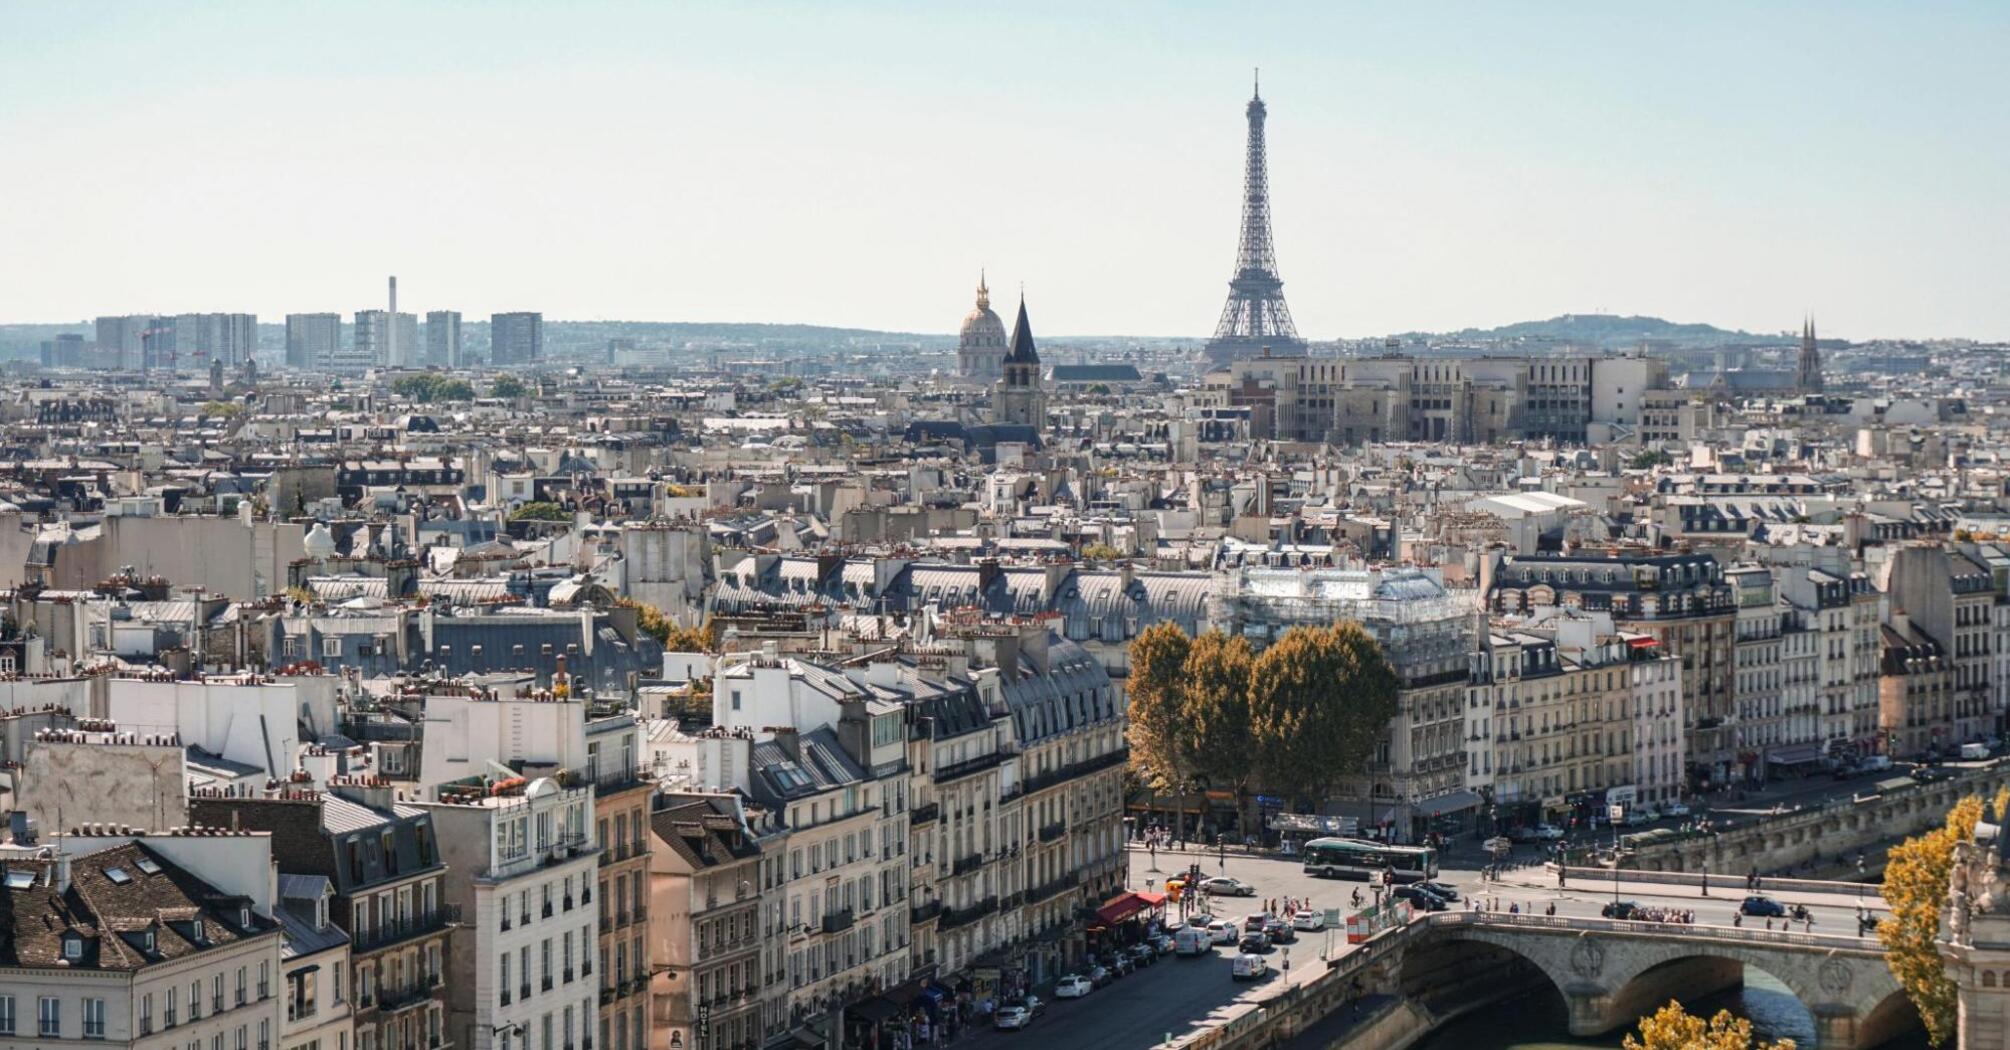 BIrd’s eye view of Paris and Eiffel Tower